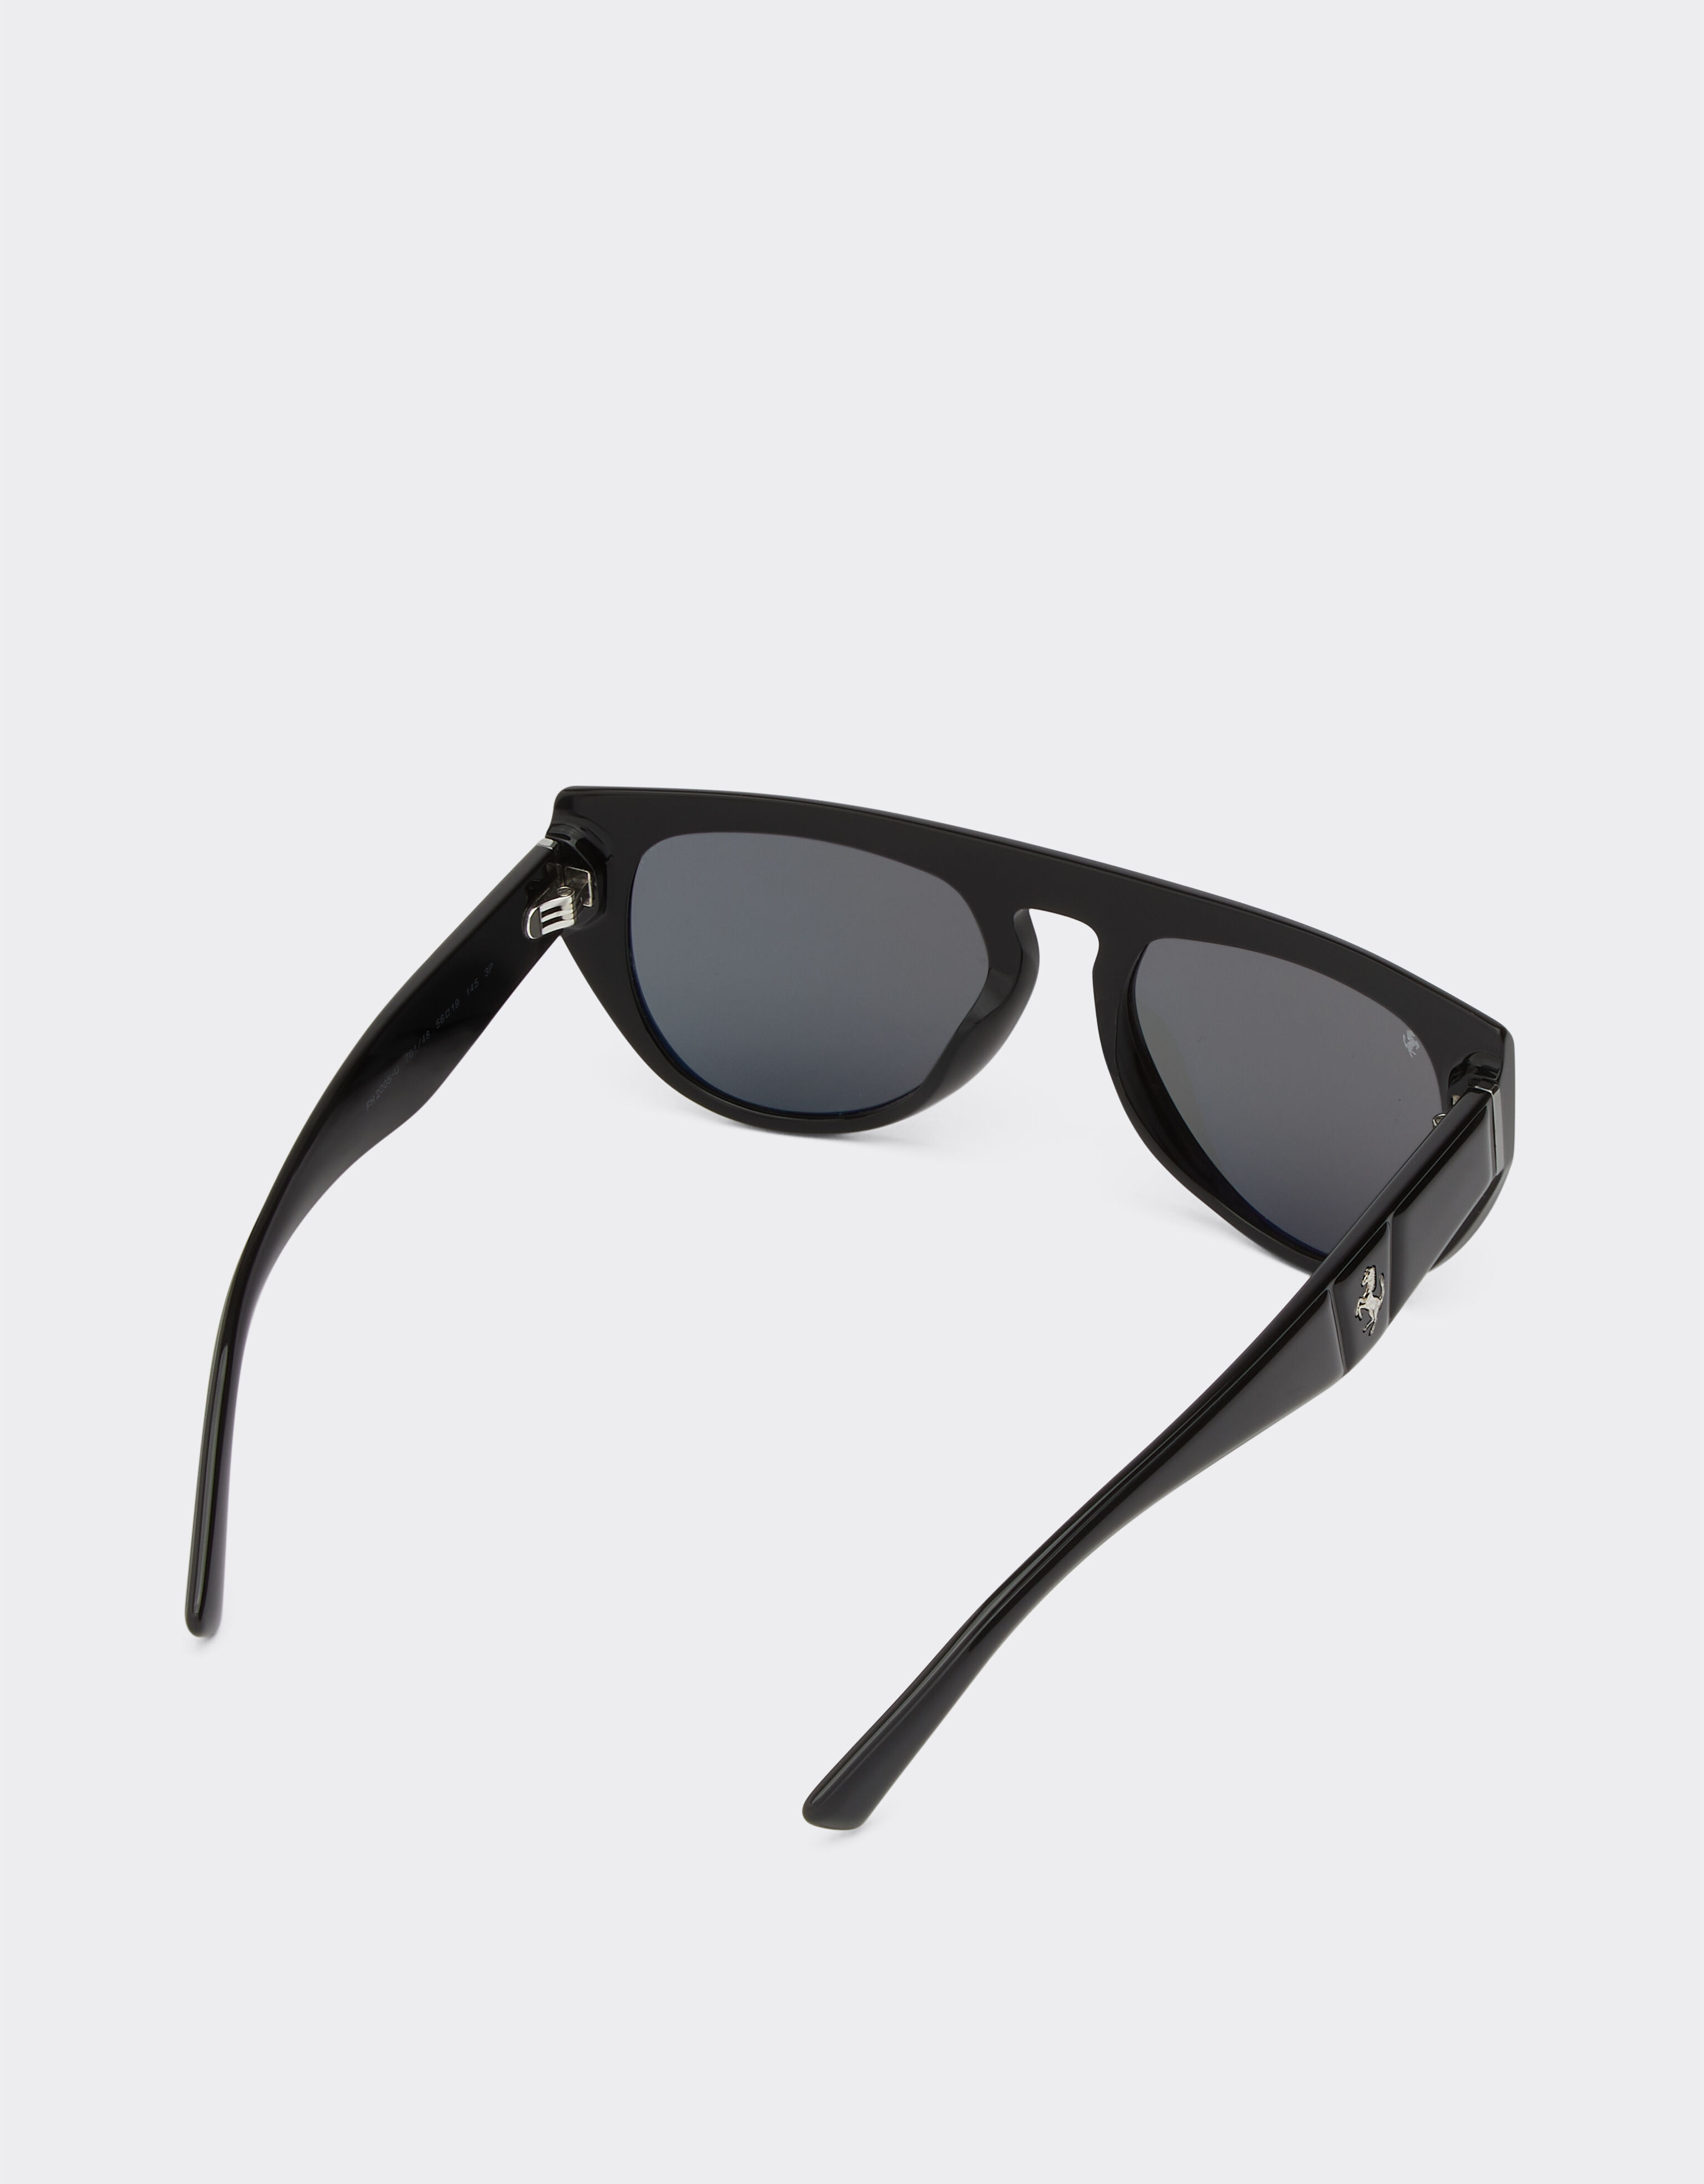 Ferrari Gafas de sol Ferrari de acetato negro con lentes de espejo polarizadas Negro F1201f